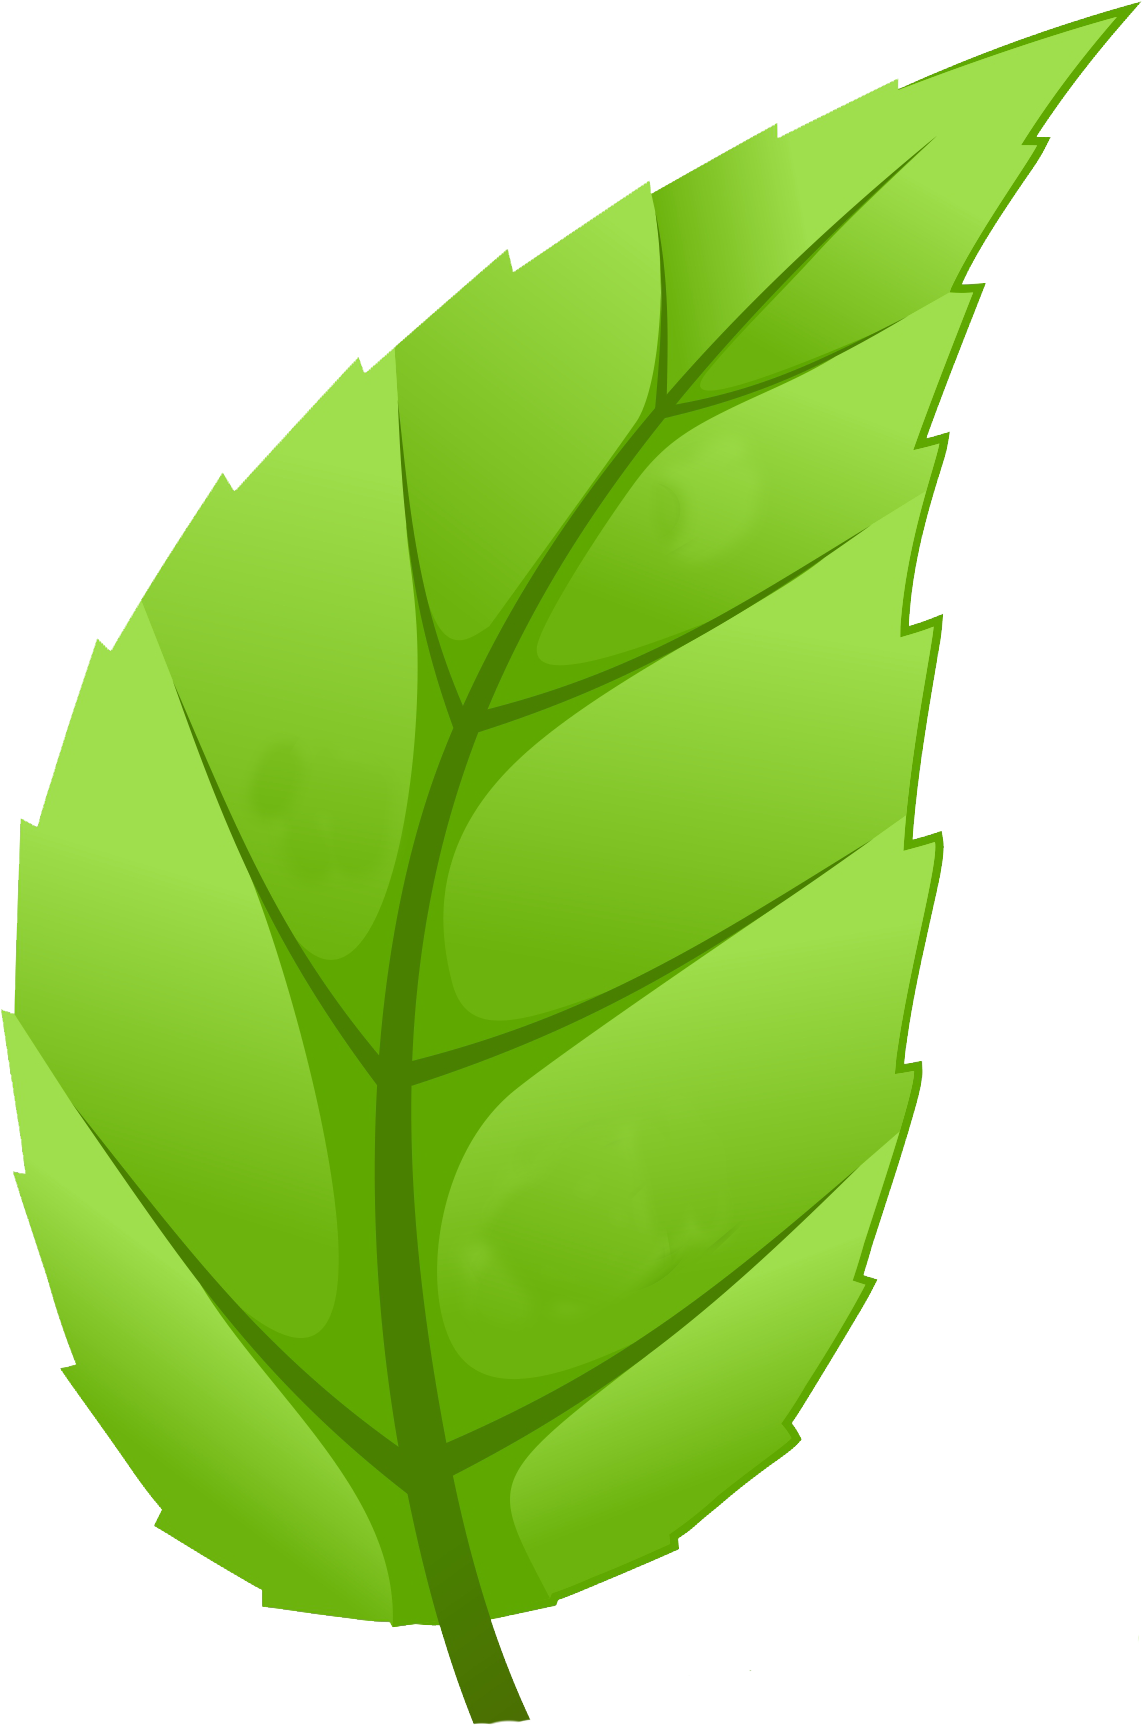 Healthy Communities - Leaf Of Tree Png (1416x1866)